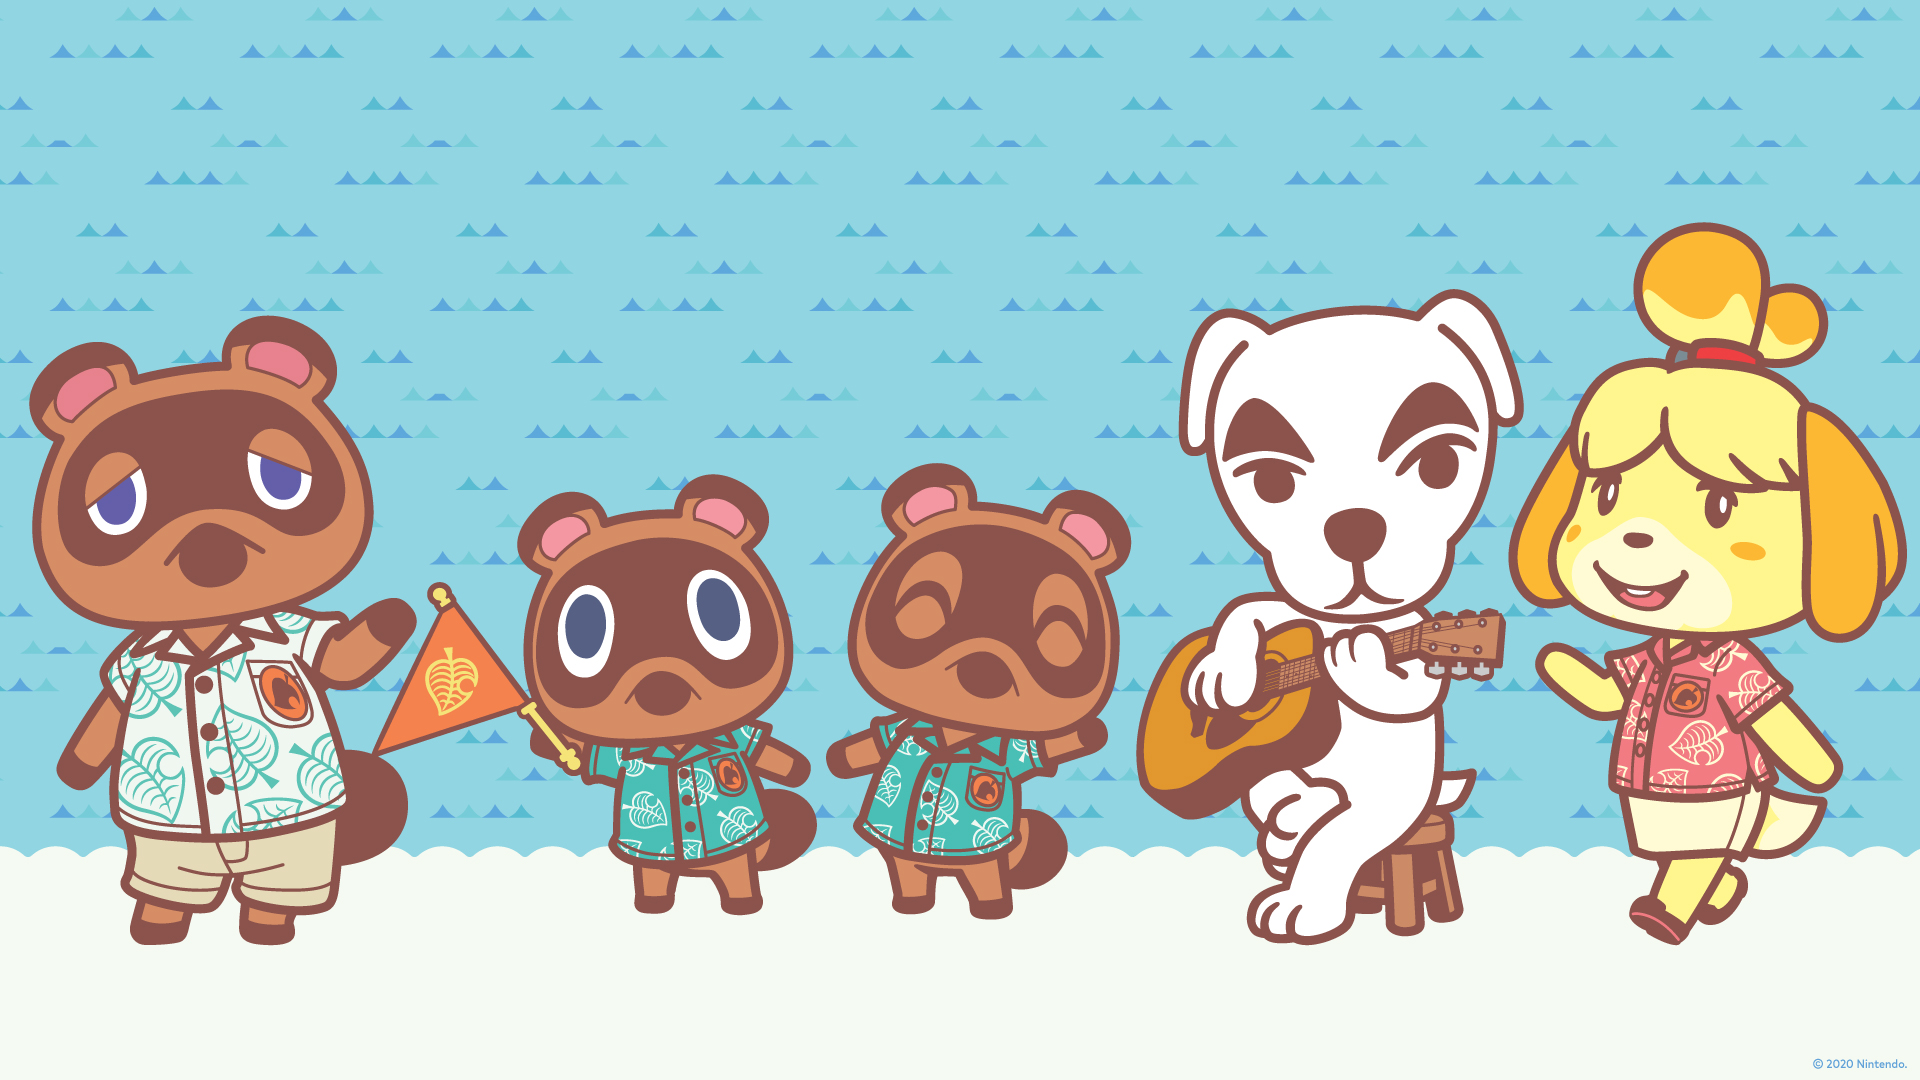 Animal Crossing Animal crossing background cute tuyệt đẹp cho fan hâm mộ